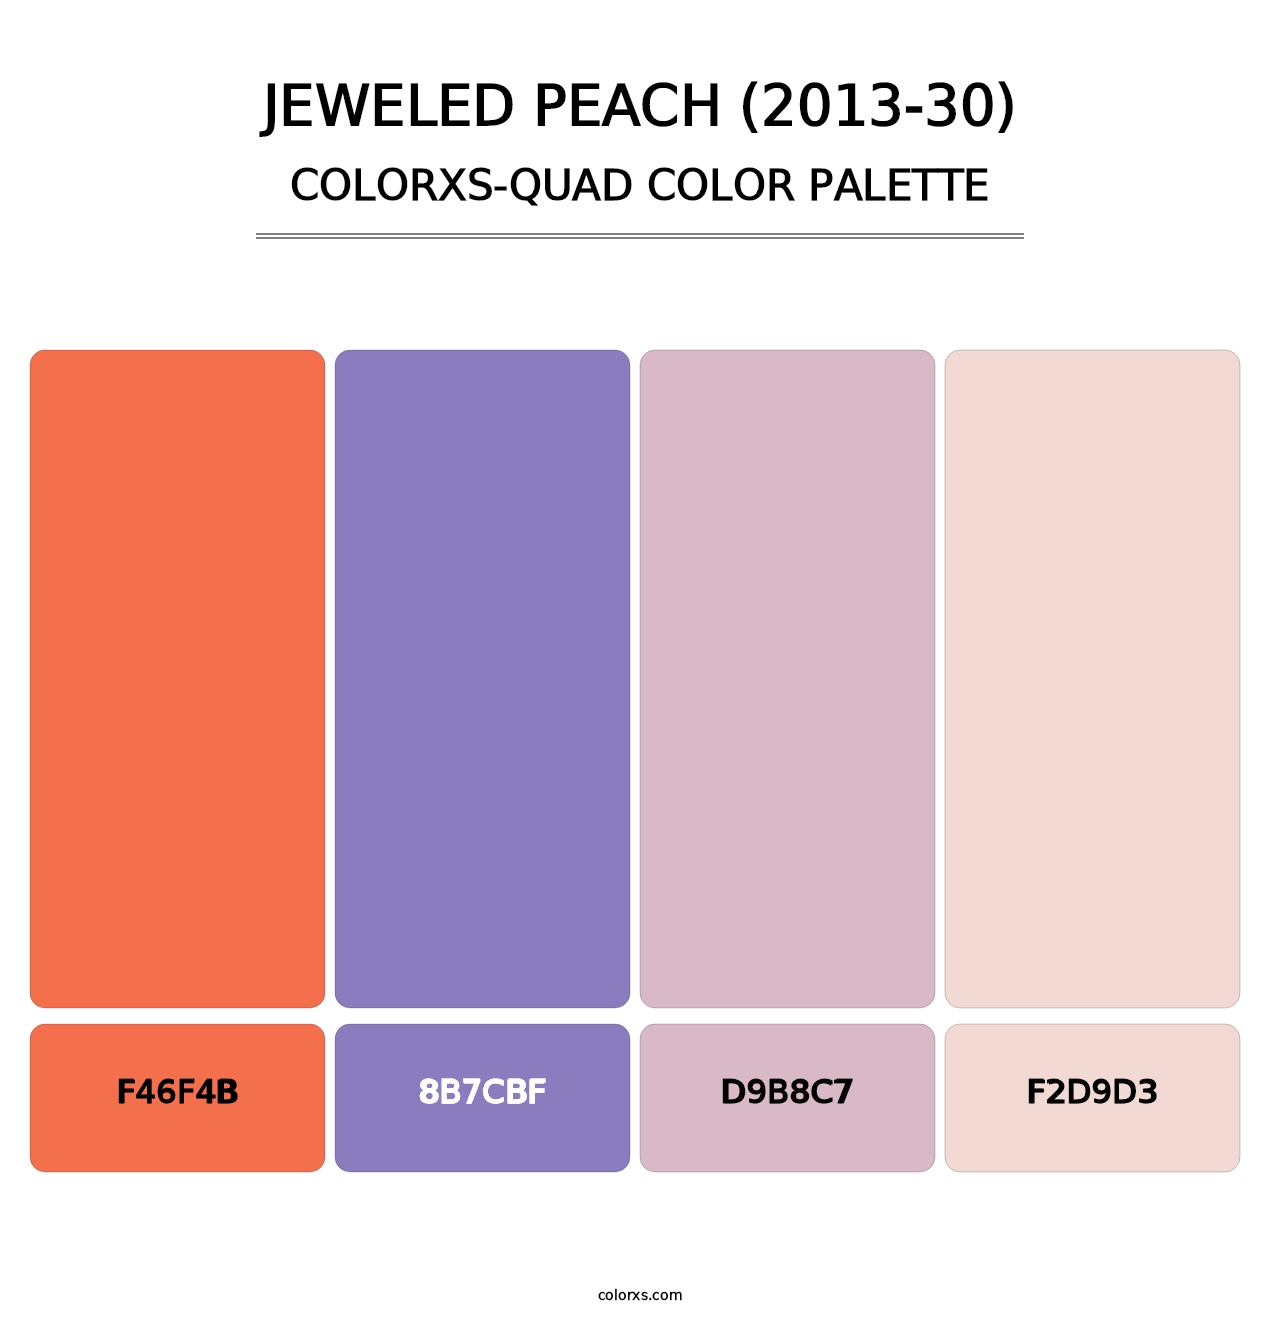 Jeweled Peach (2013-30) - Colorxs Quad Palette